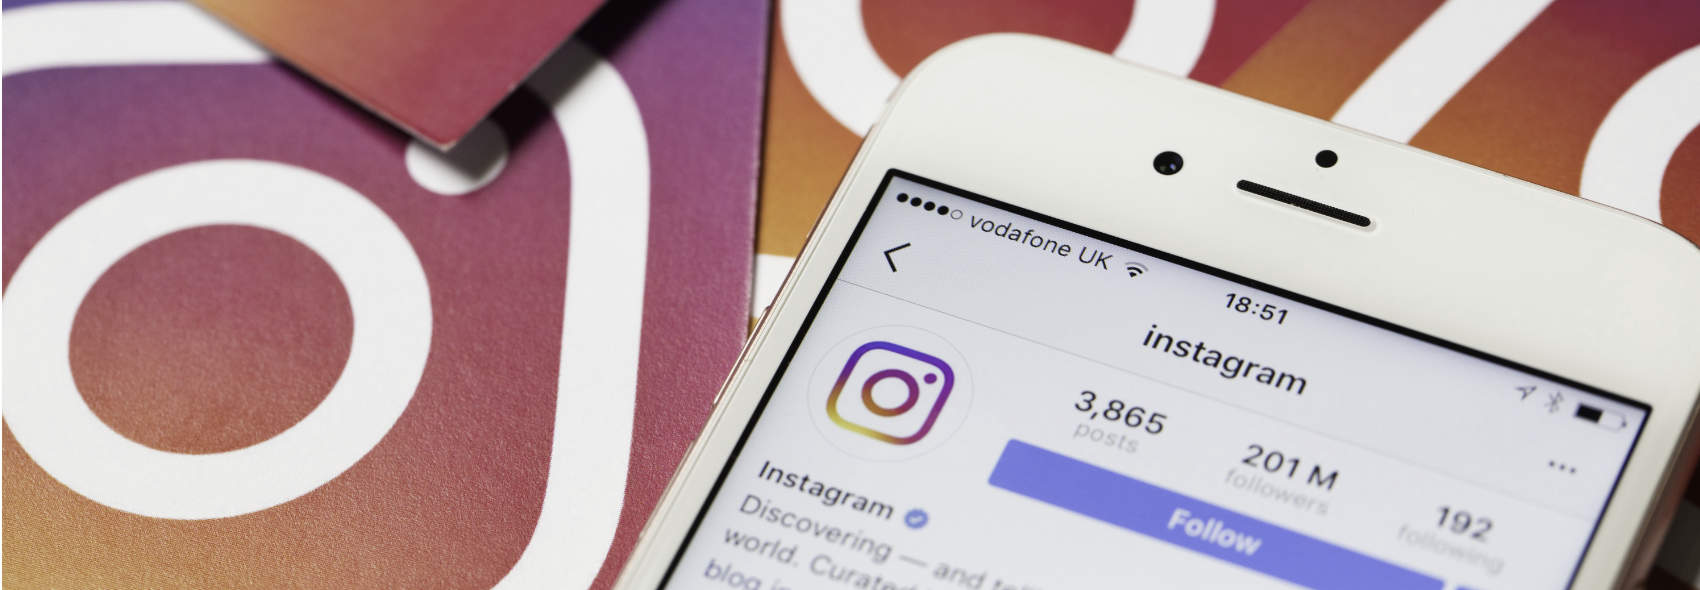 Instagram boss to meet the health secretary over self-harm images